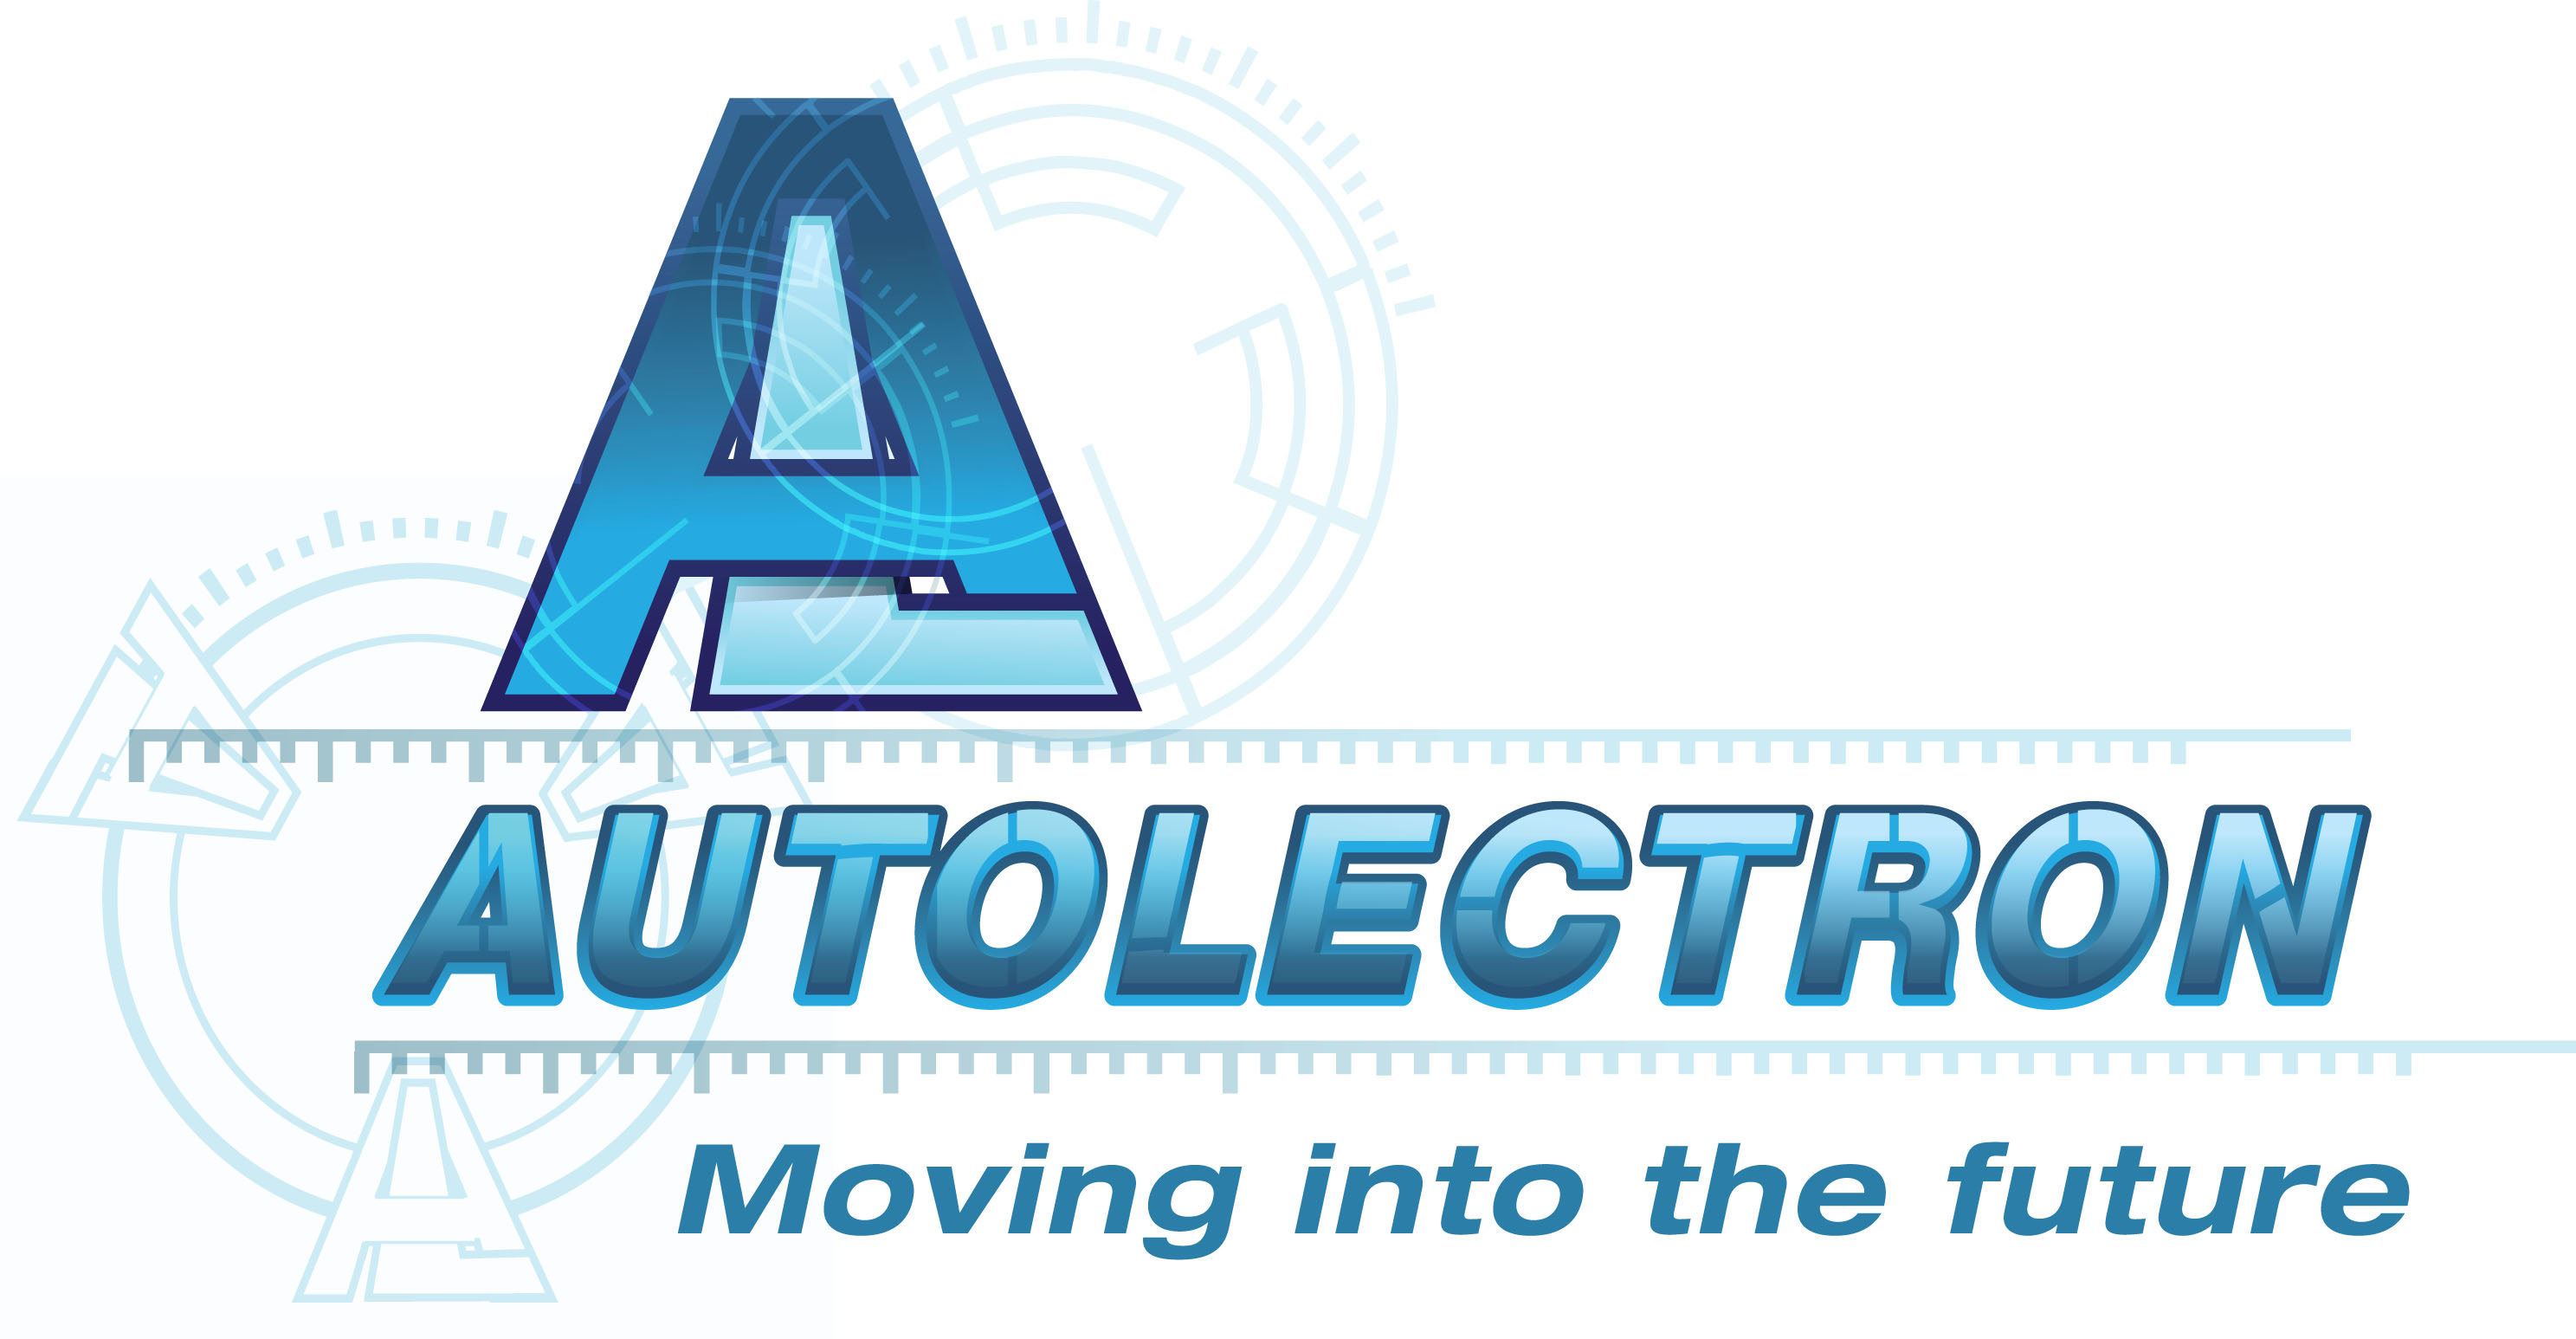 Autolectron cc logo